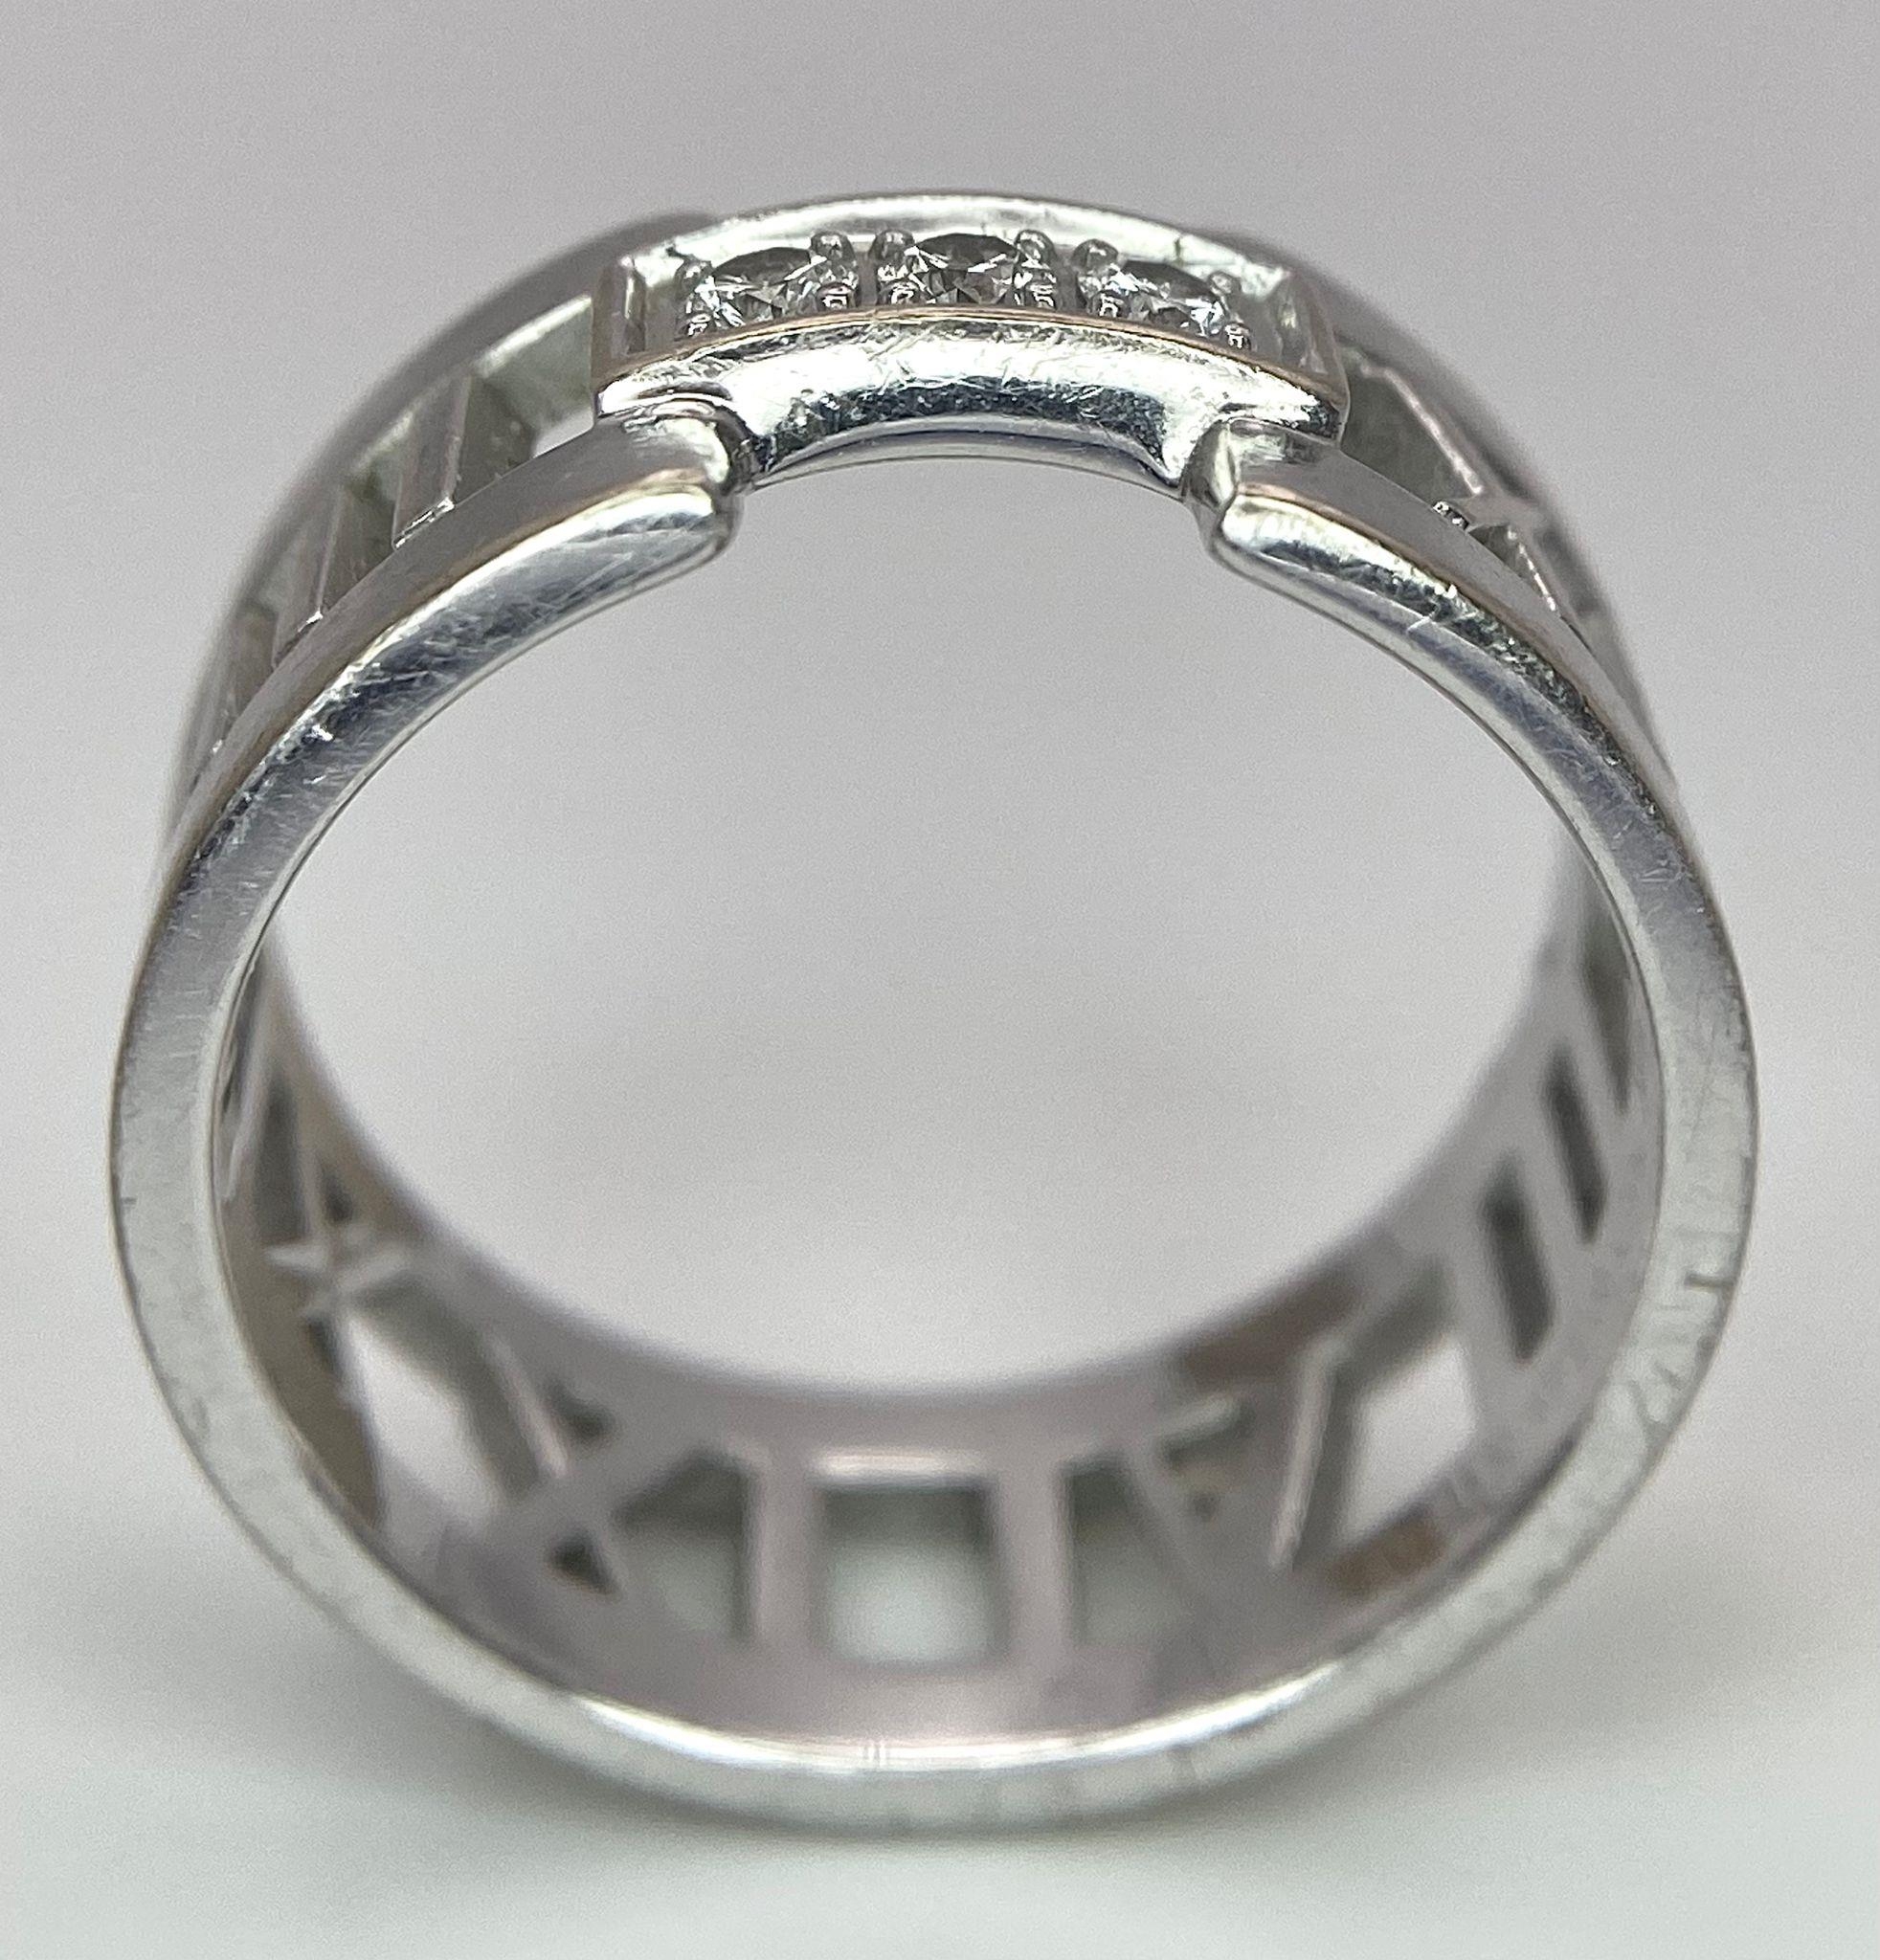 An 18K White Gold Tiffany Atlas Diamond Ring. Pierced Roman numeral decoration. Tiffany mark. Size - Image 4 of 9